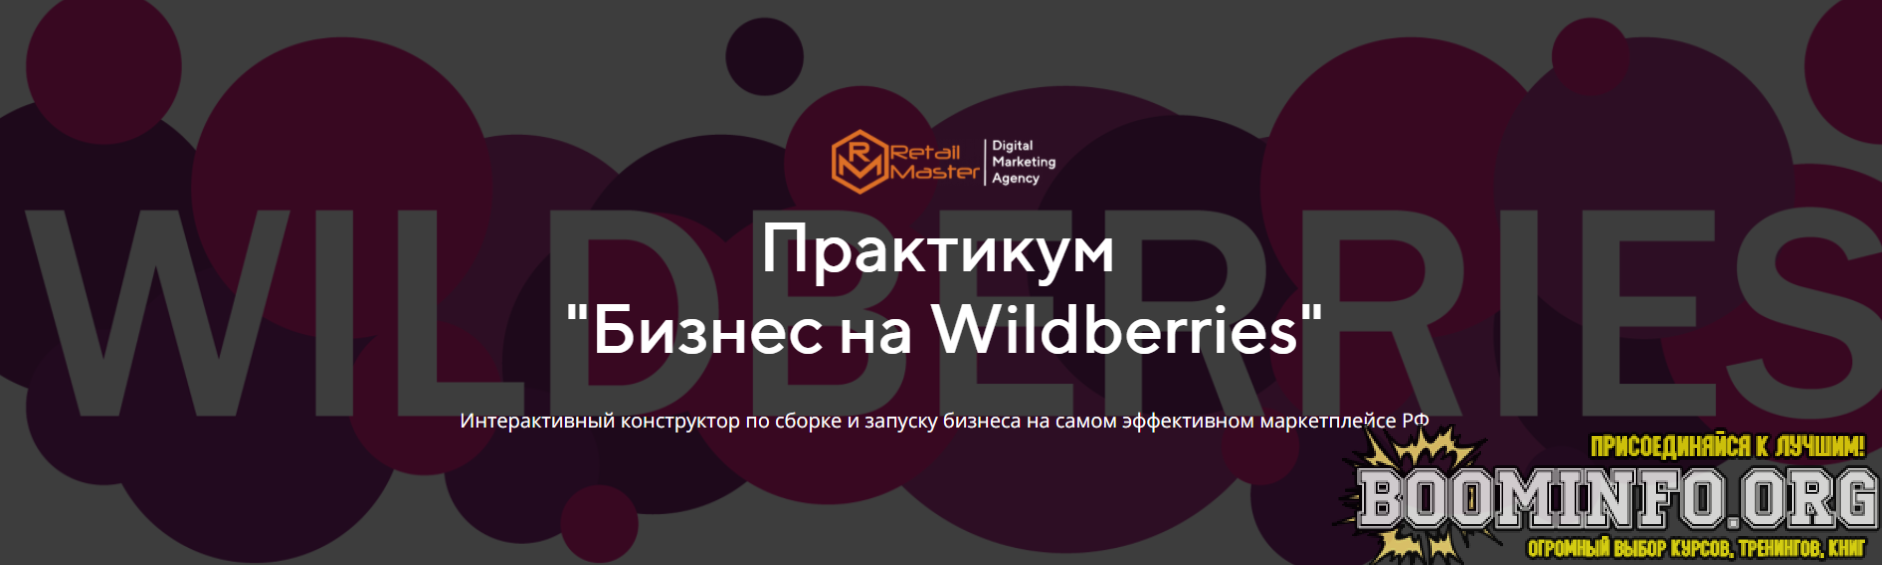 igor-majorov-biznes-na-wildberries-2021-paket-biznes-png.865